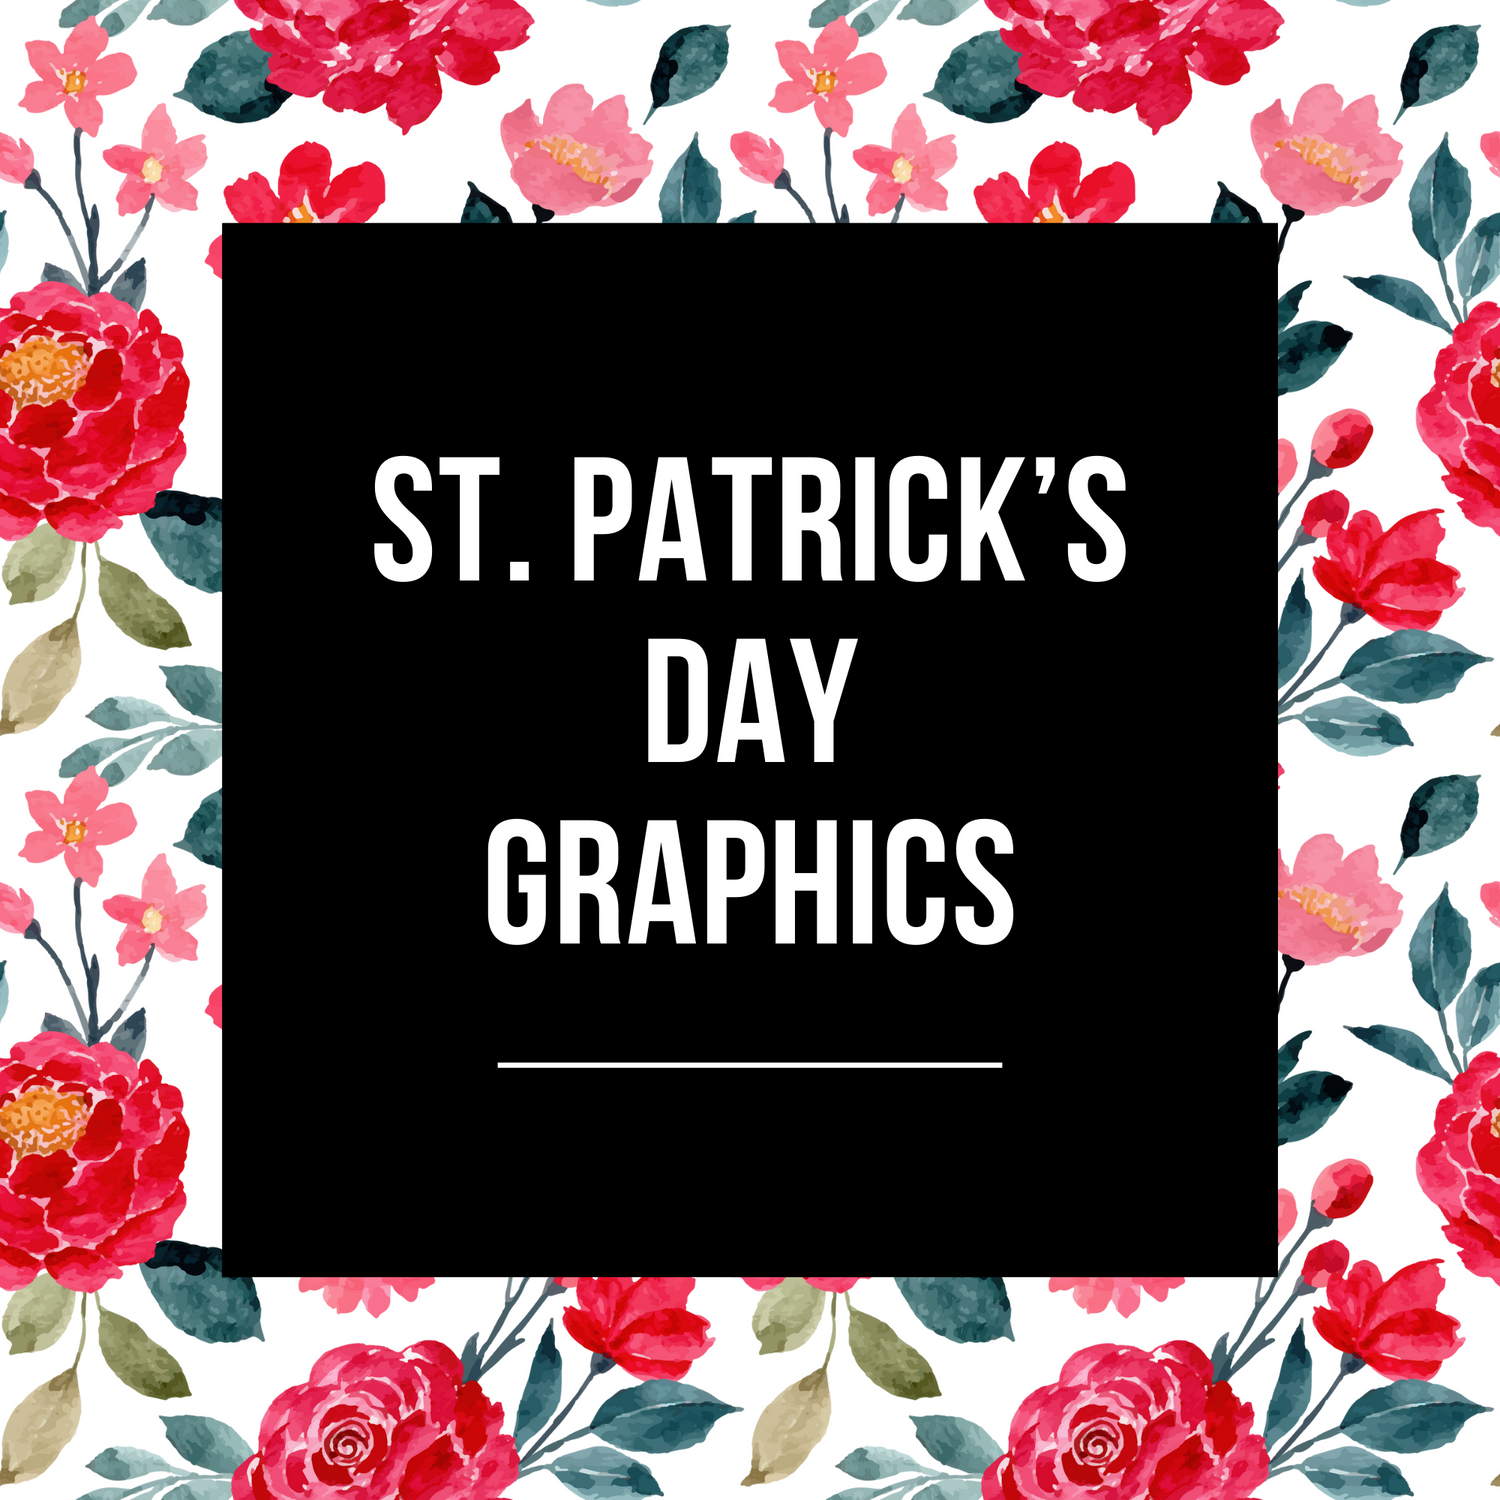 St. Patrick's Day Graphics